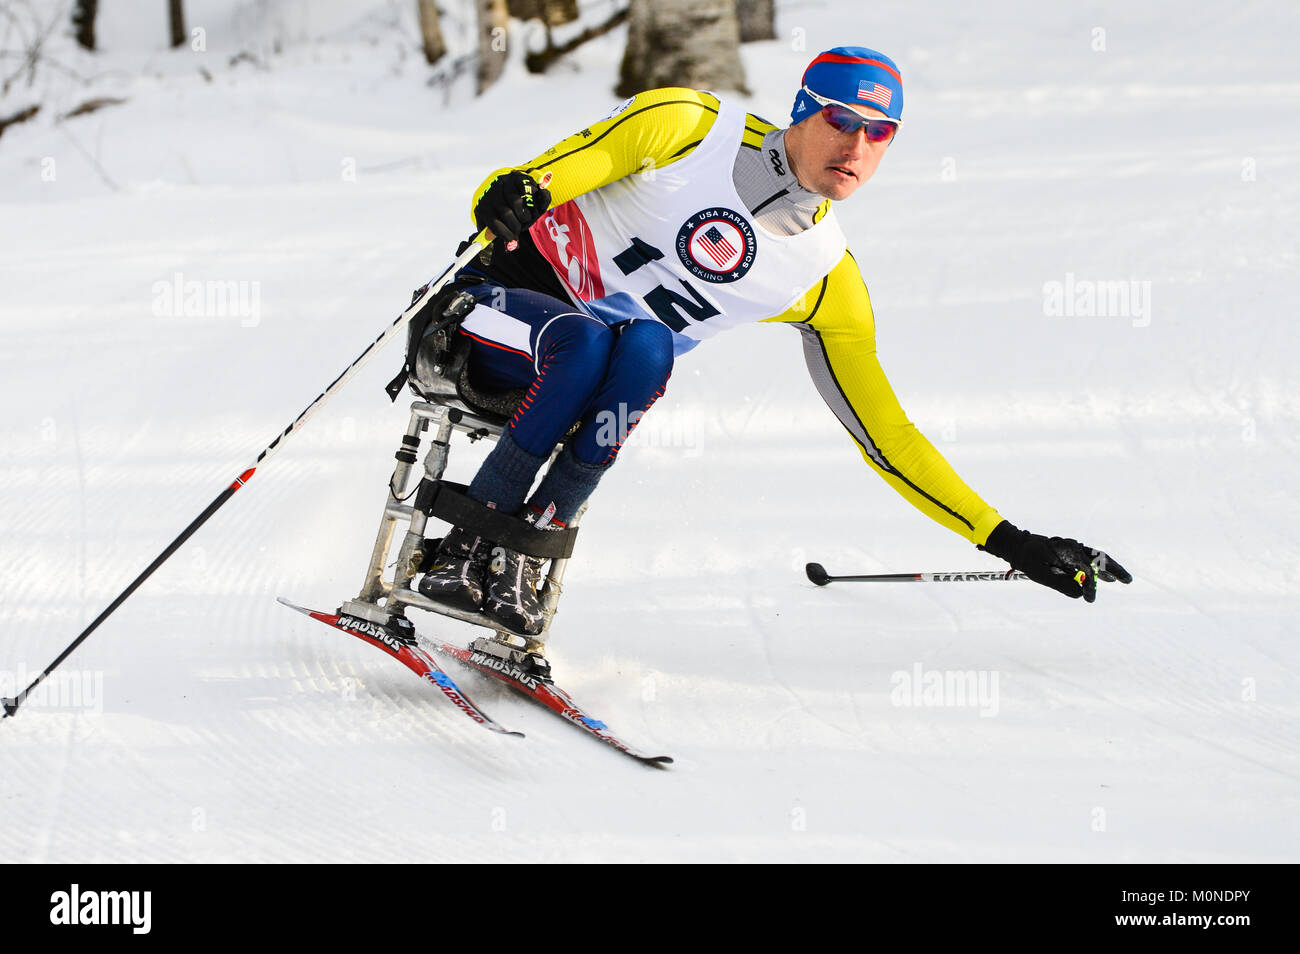 Paralympic cross country ski racer at 2016 U.S. Paralympics Sit Ski races, Craftsbury Outdoor Center, Craftsbury, VT, USA. Stock Photo